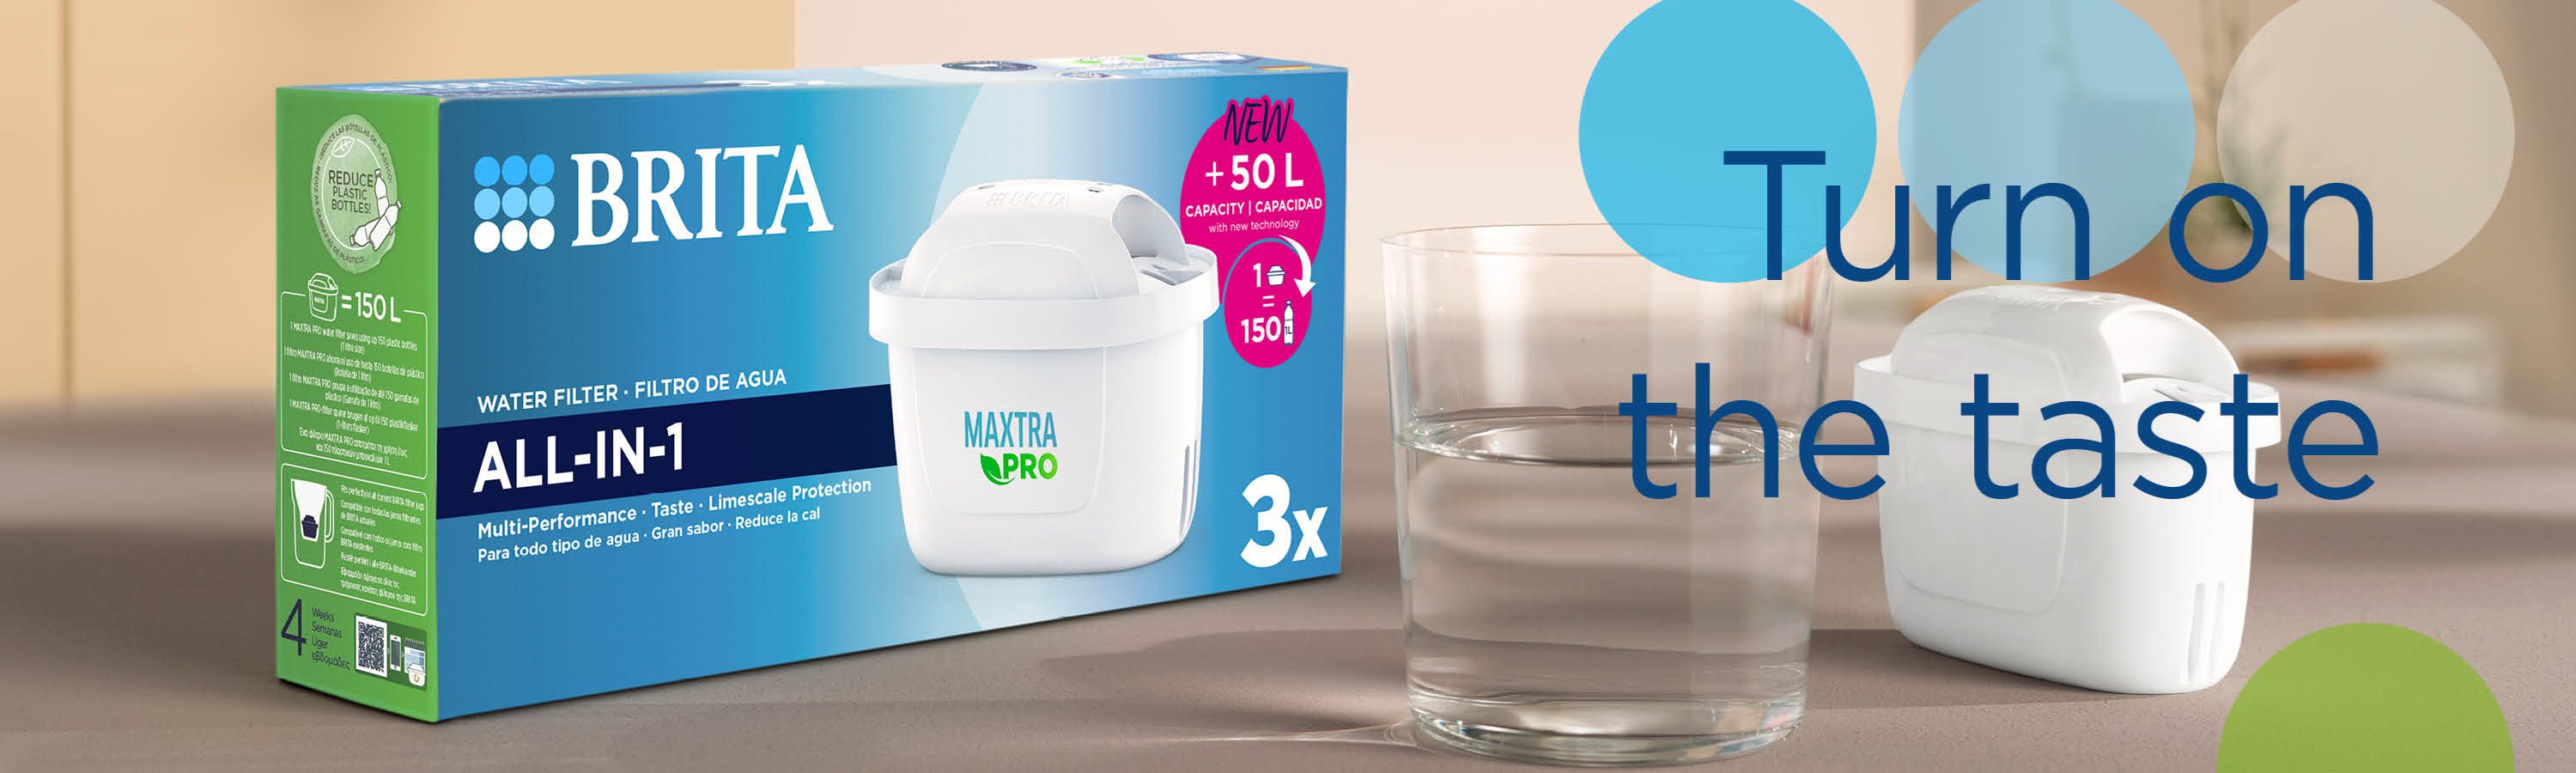 8 x BRITA Maxtra+ Plus Water Filter Jug Replacement Cartridges Refills UK  Pack